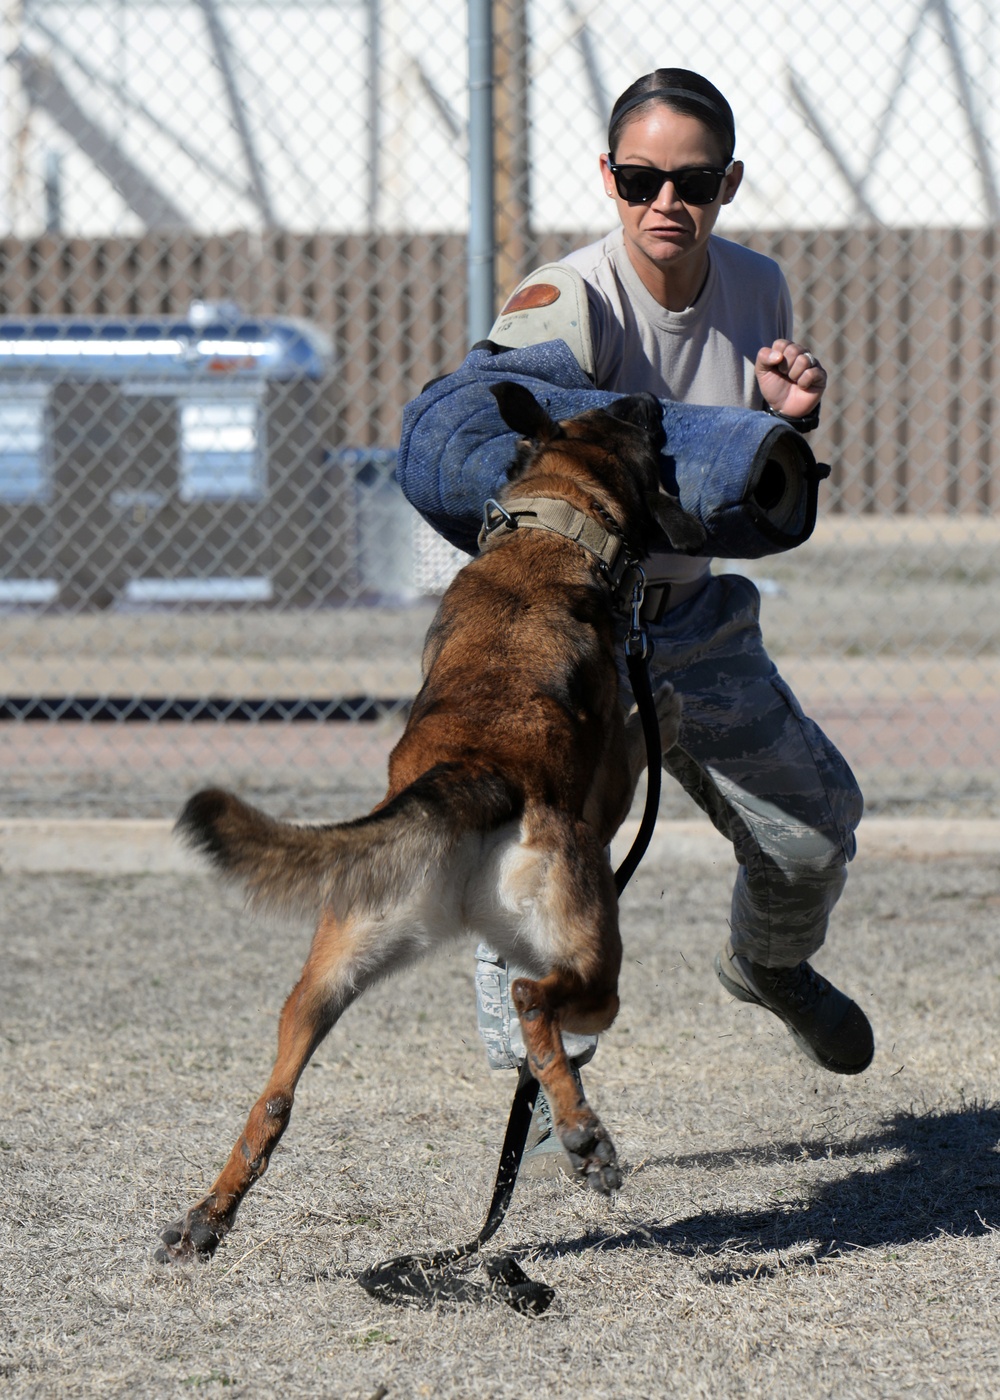 Altus’ working dog team enhances security forces mission